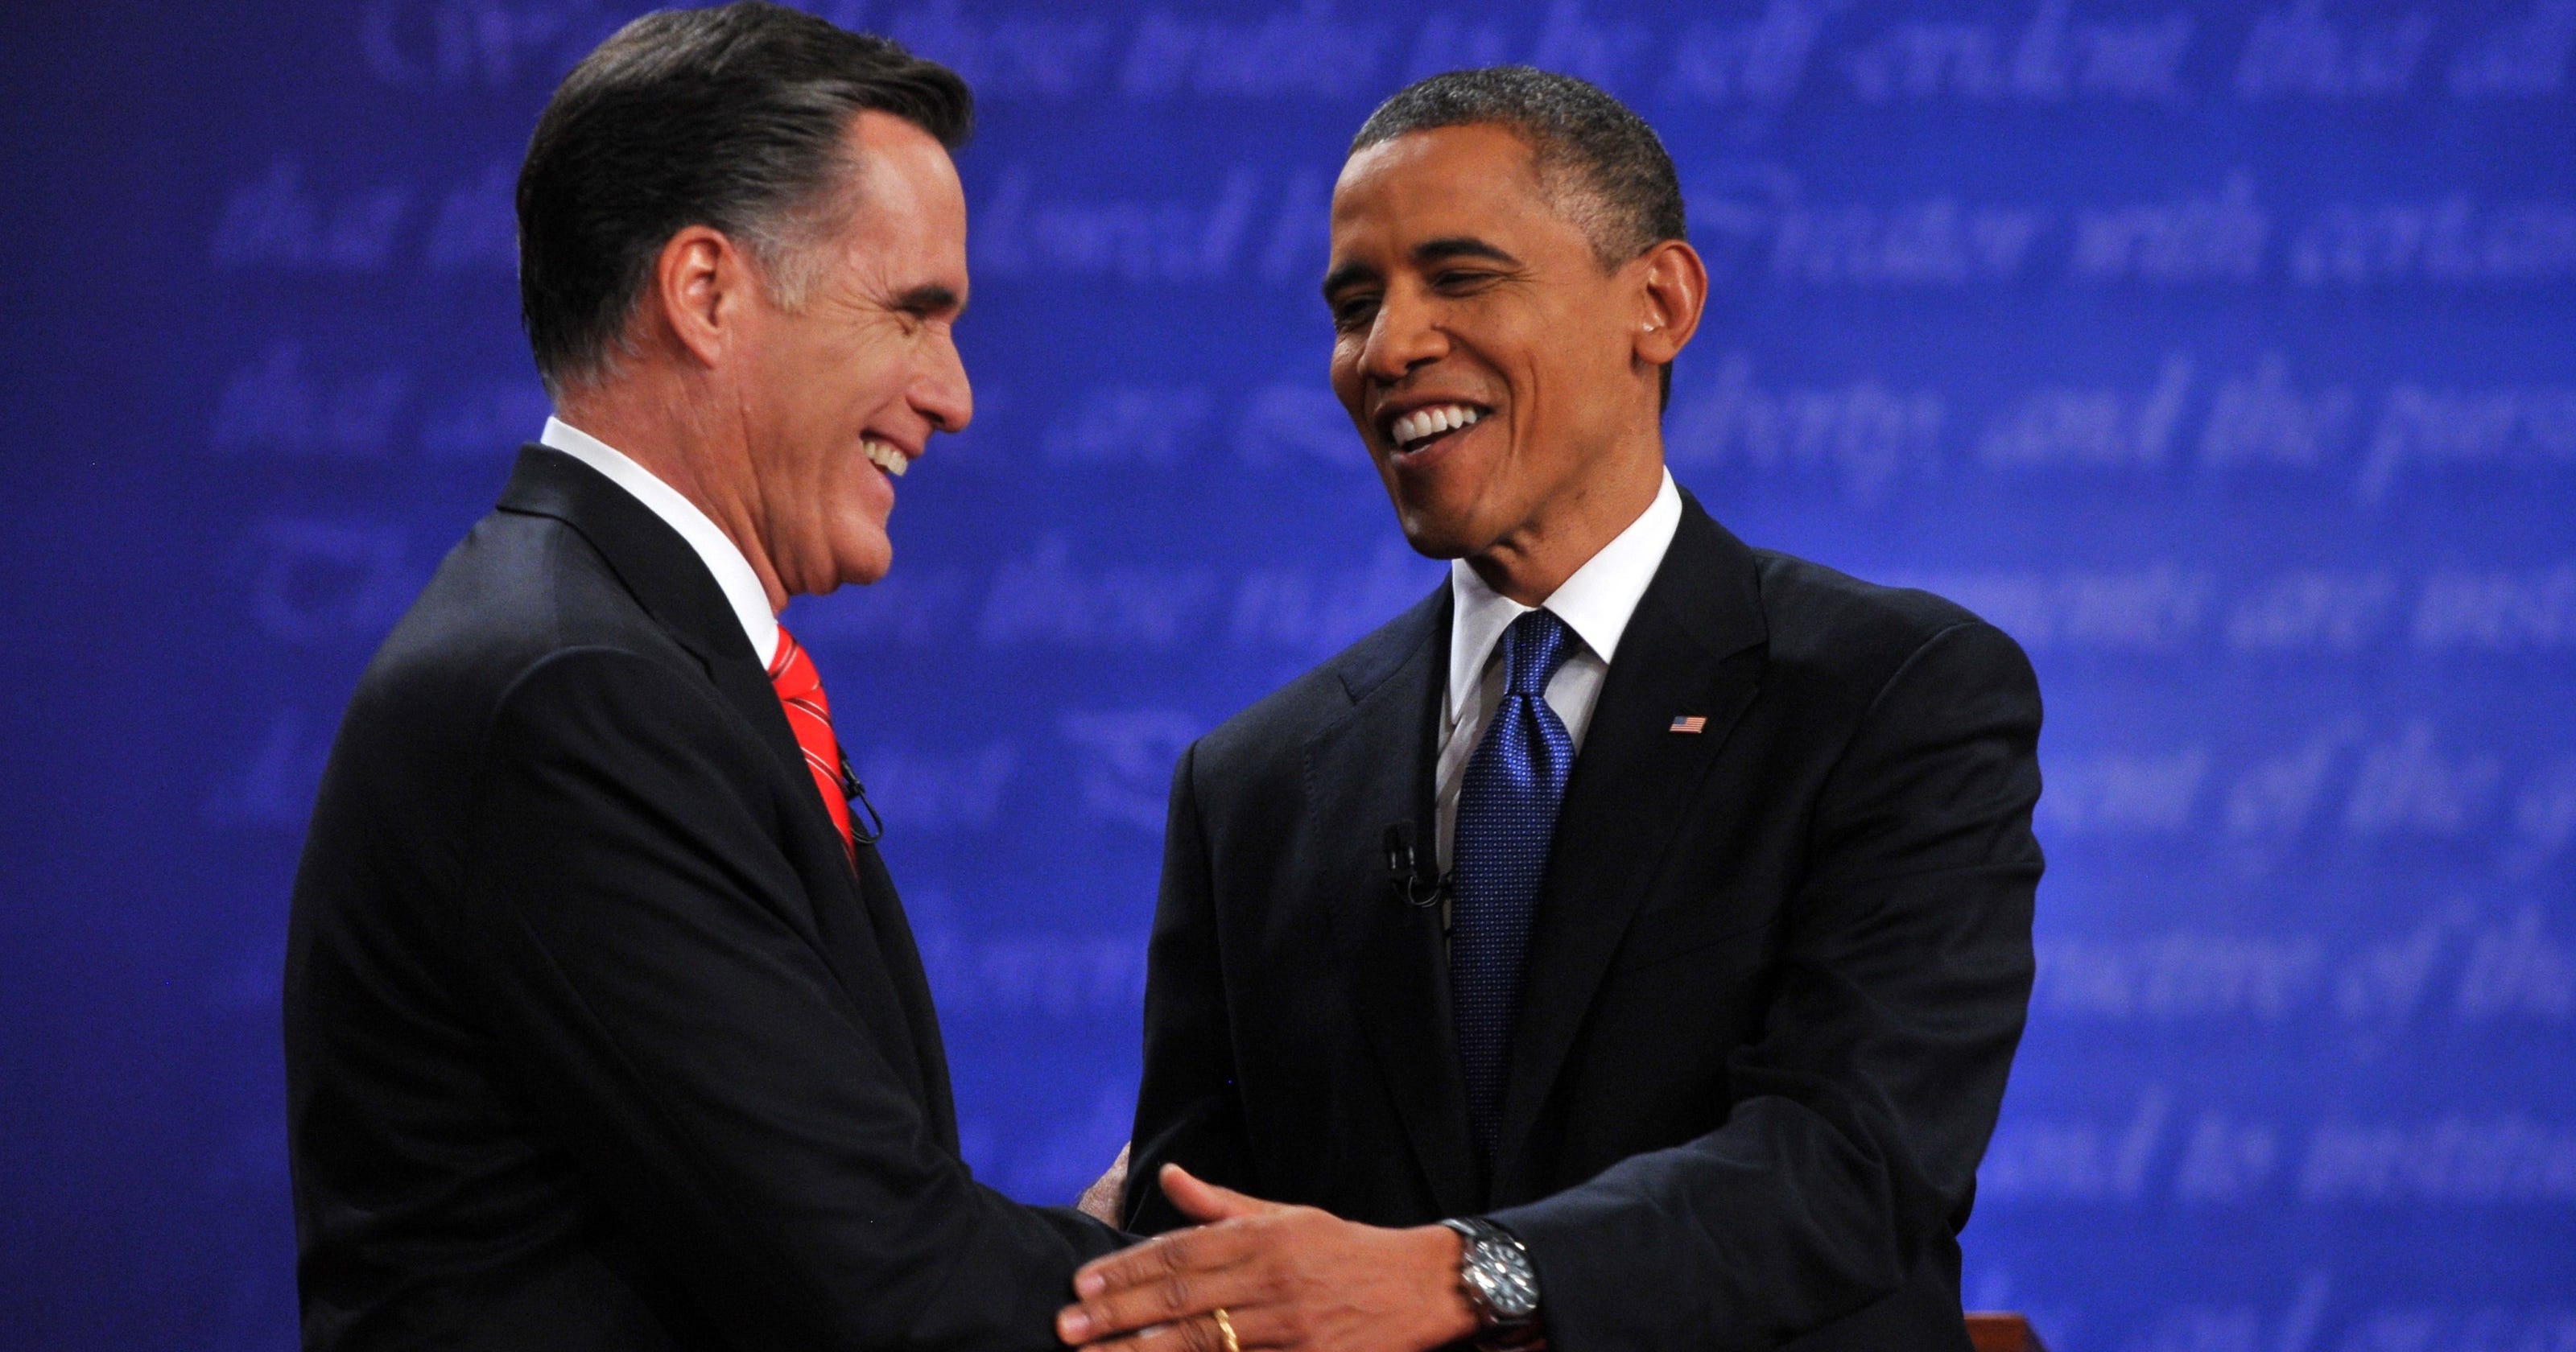 Presidential debate sets record on Twitter